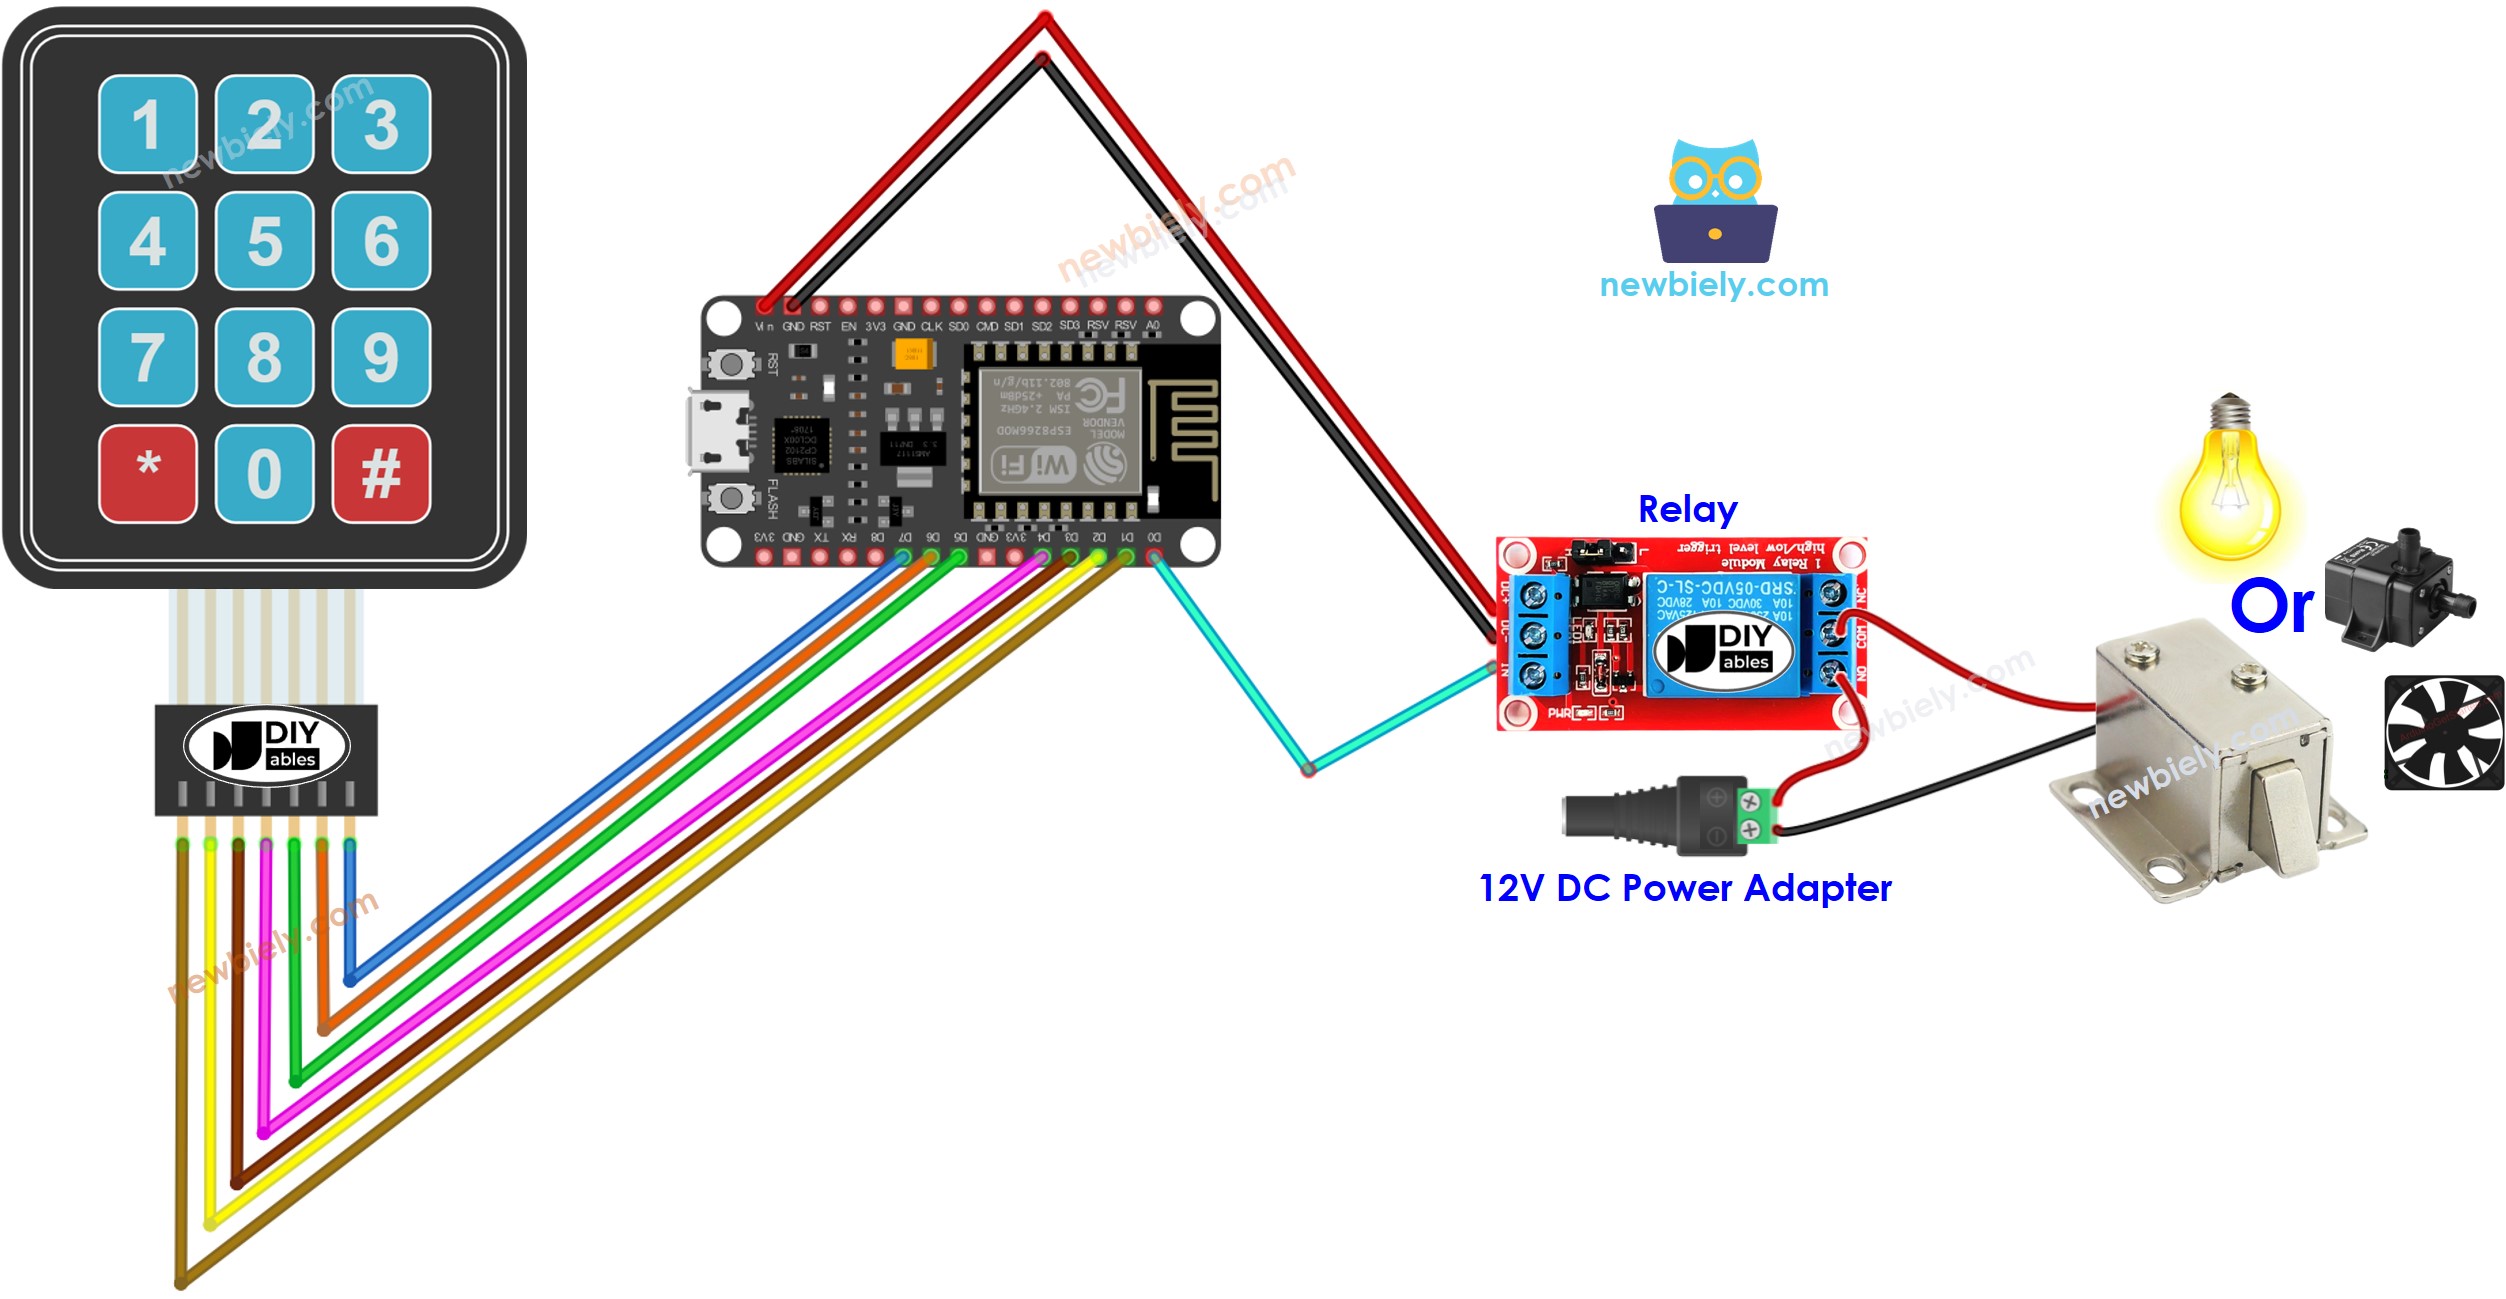 The wiring diagram between ESP8266 NodeMCU and keypad relay